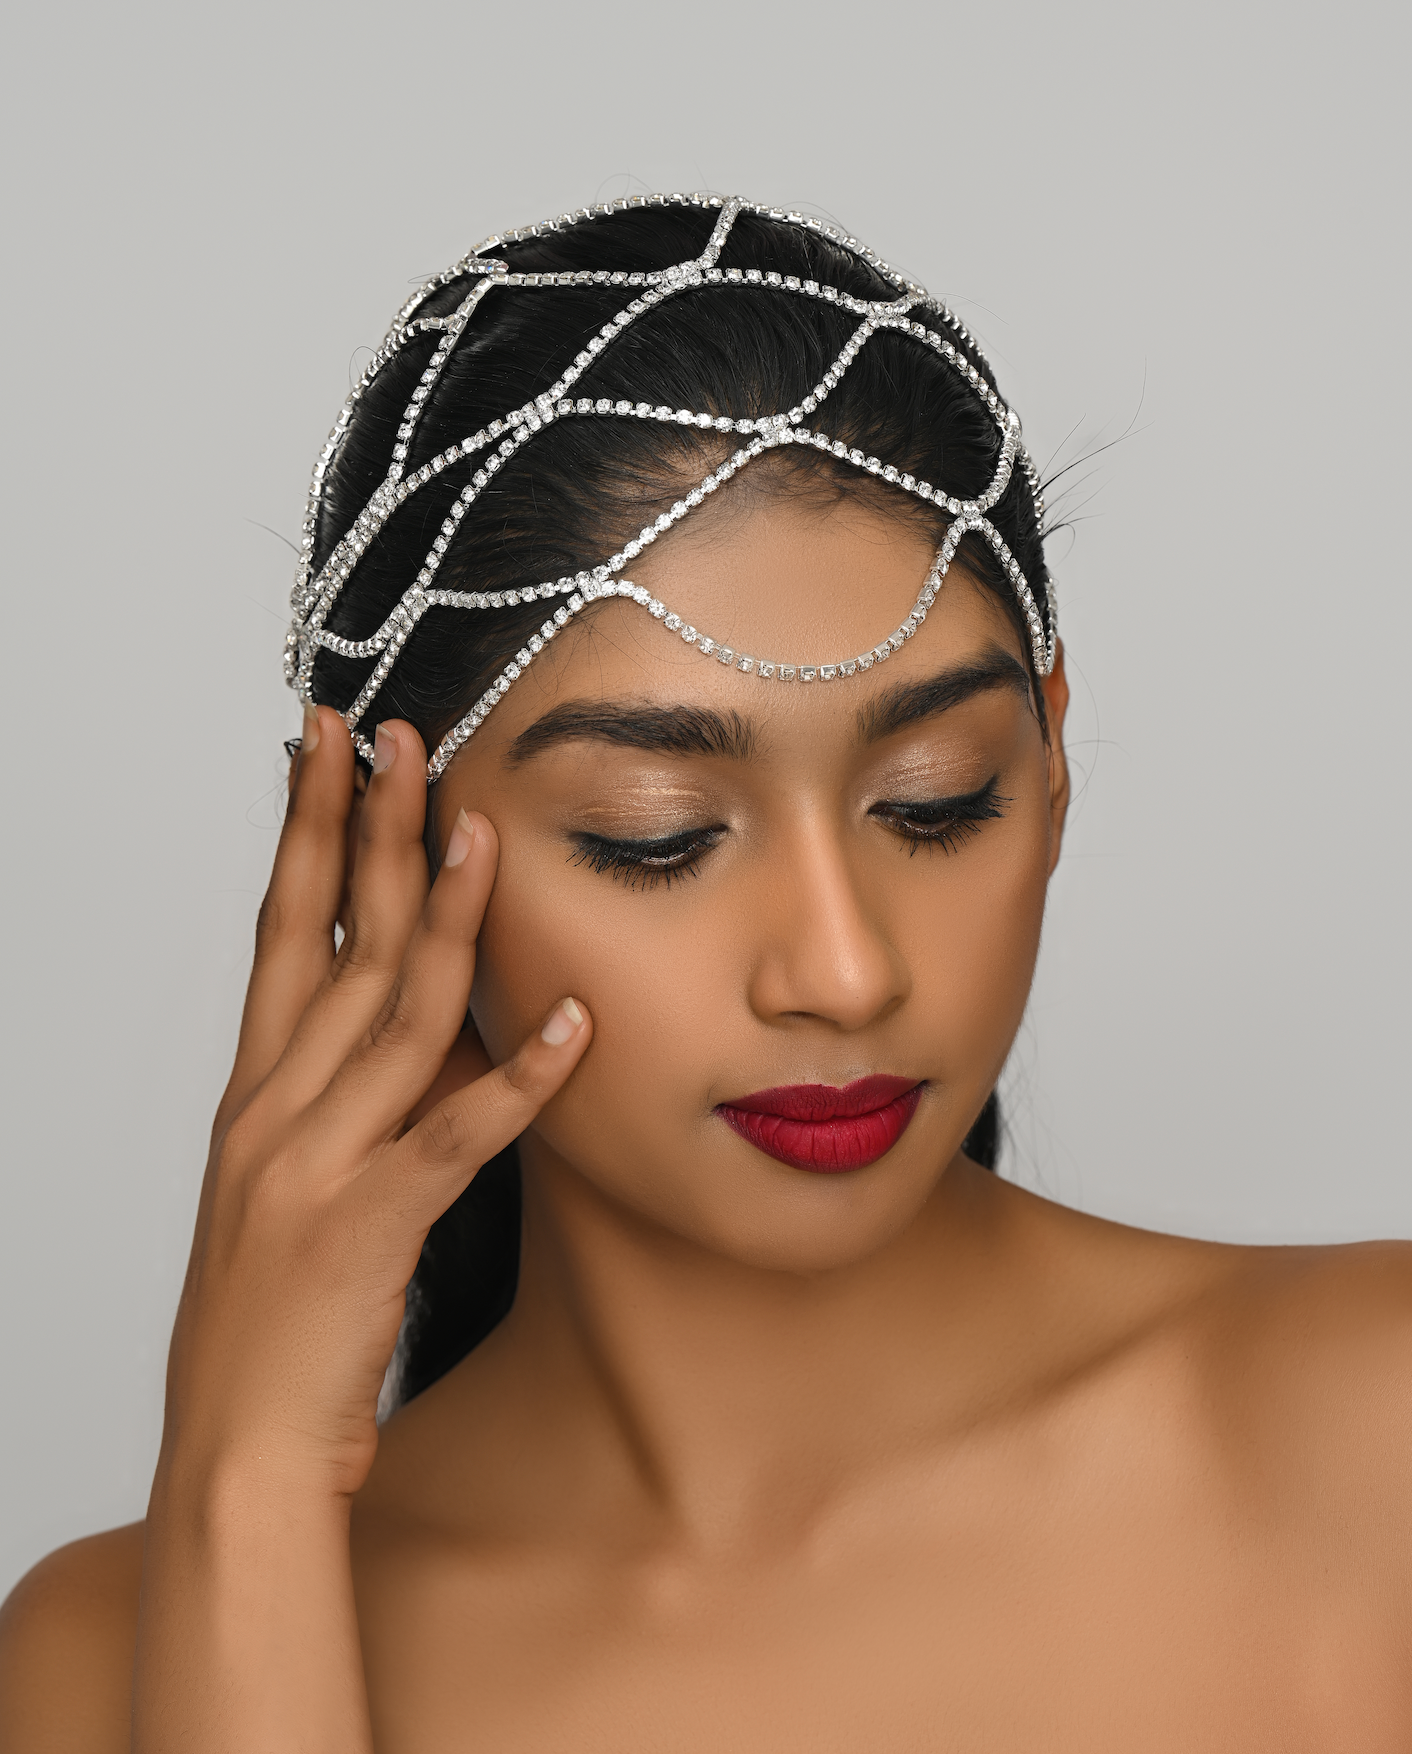 Diamante Rhinestone Multi-layered Tassels Headpiece Hair Jewellery Cap